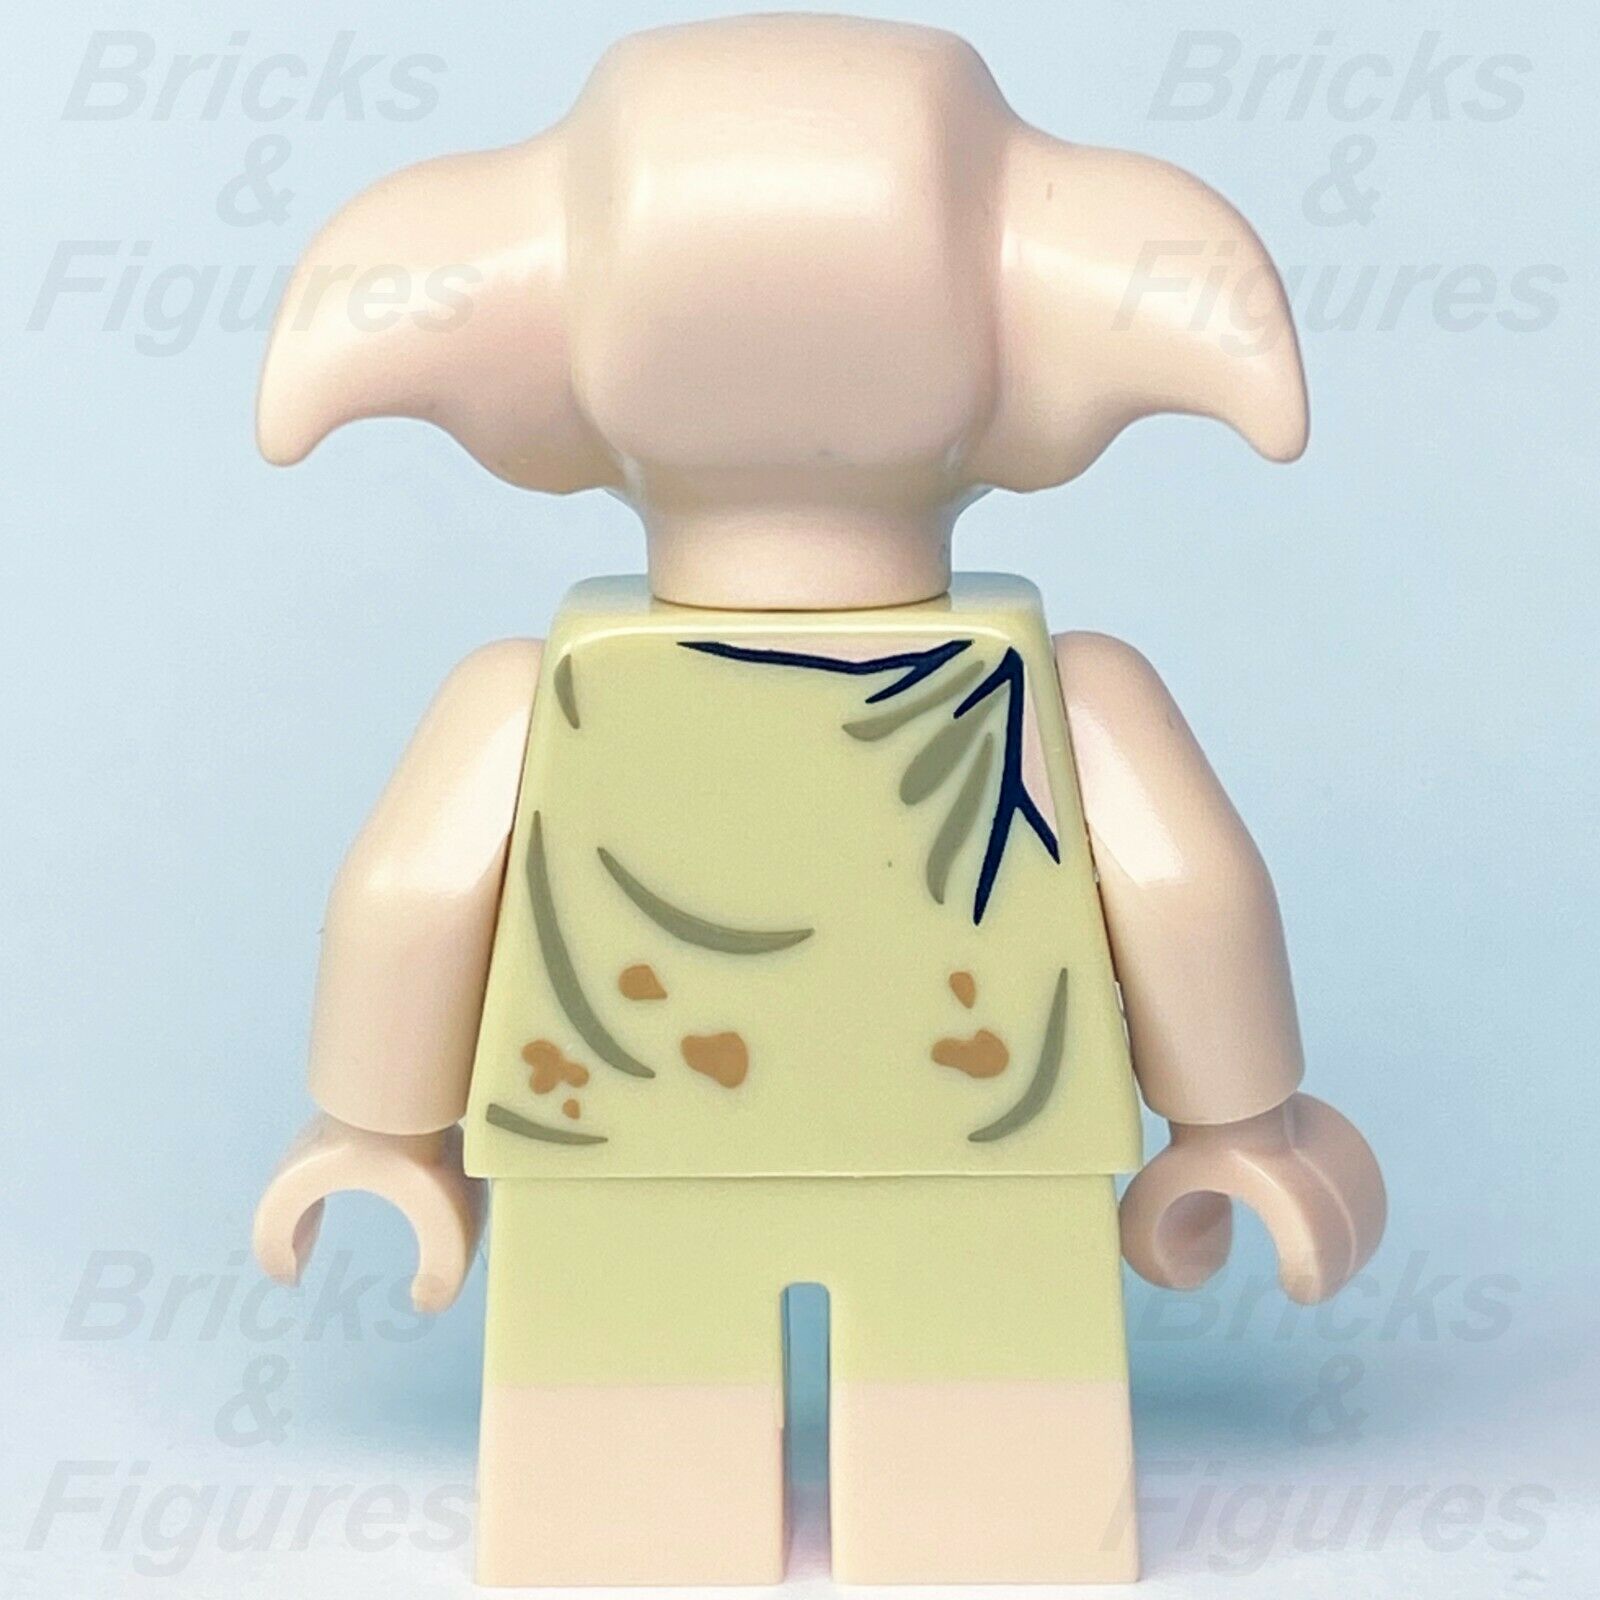 LEGO Harry Potter Dobby the House Elf Collectible Minifigures 71022 - Bricks & Figures